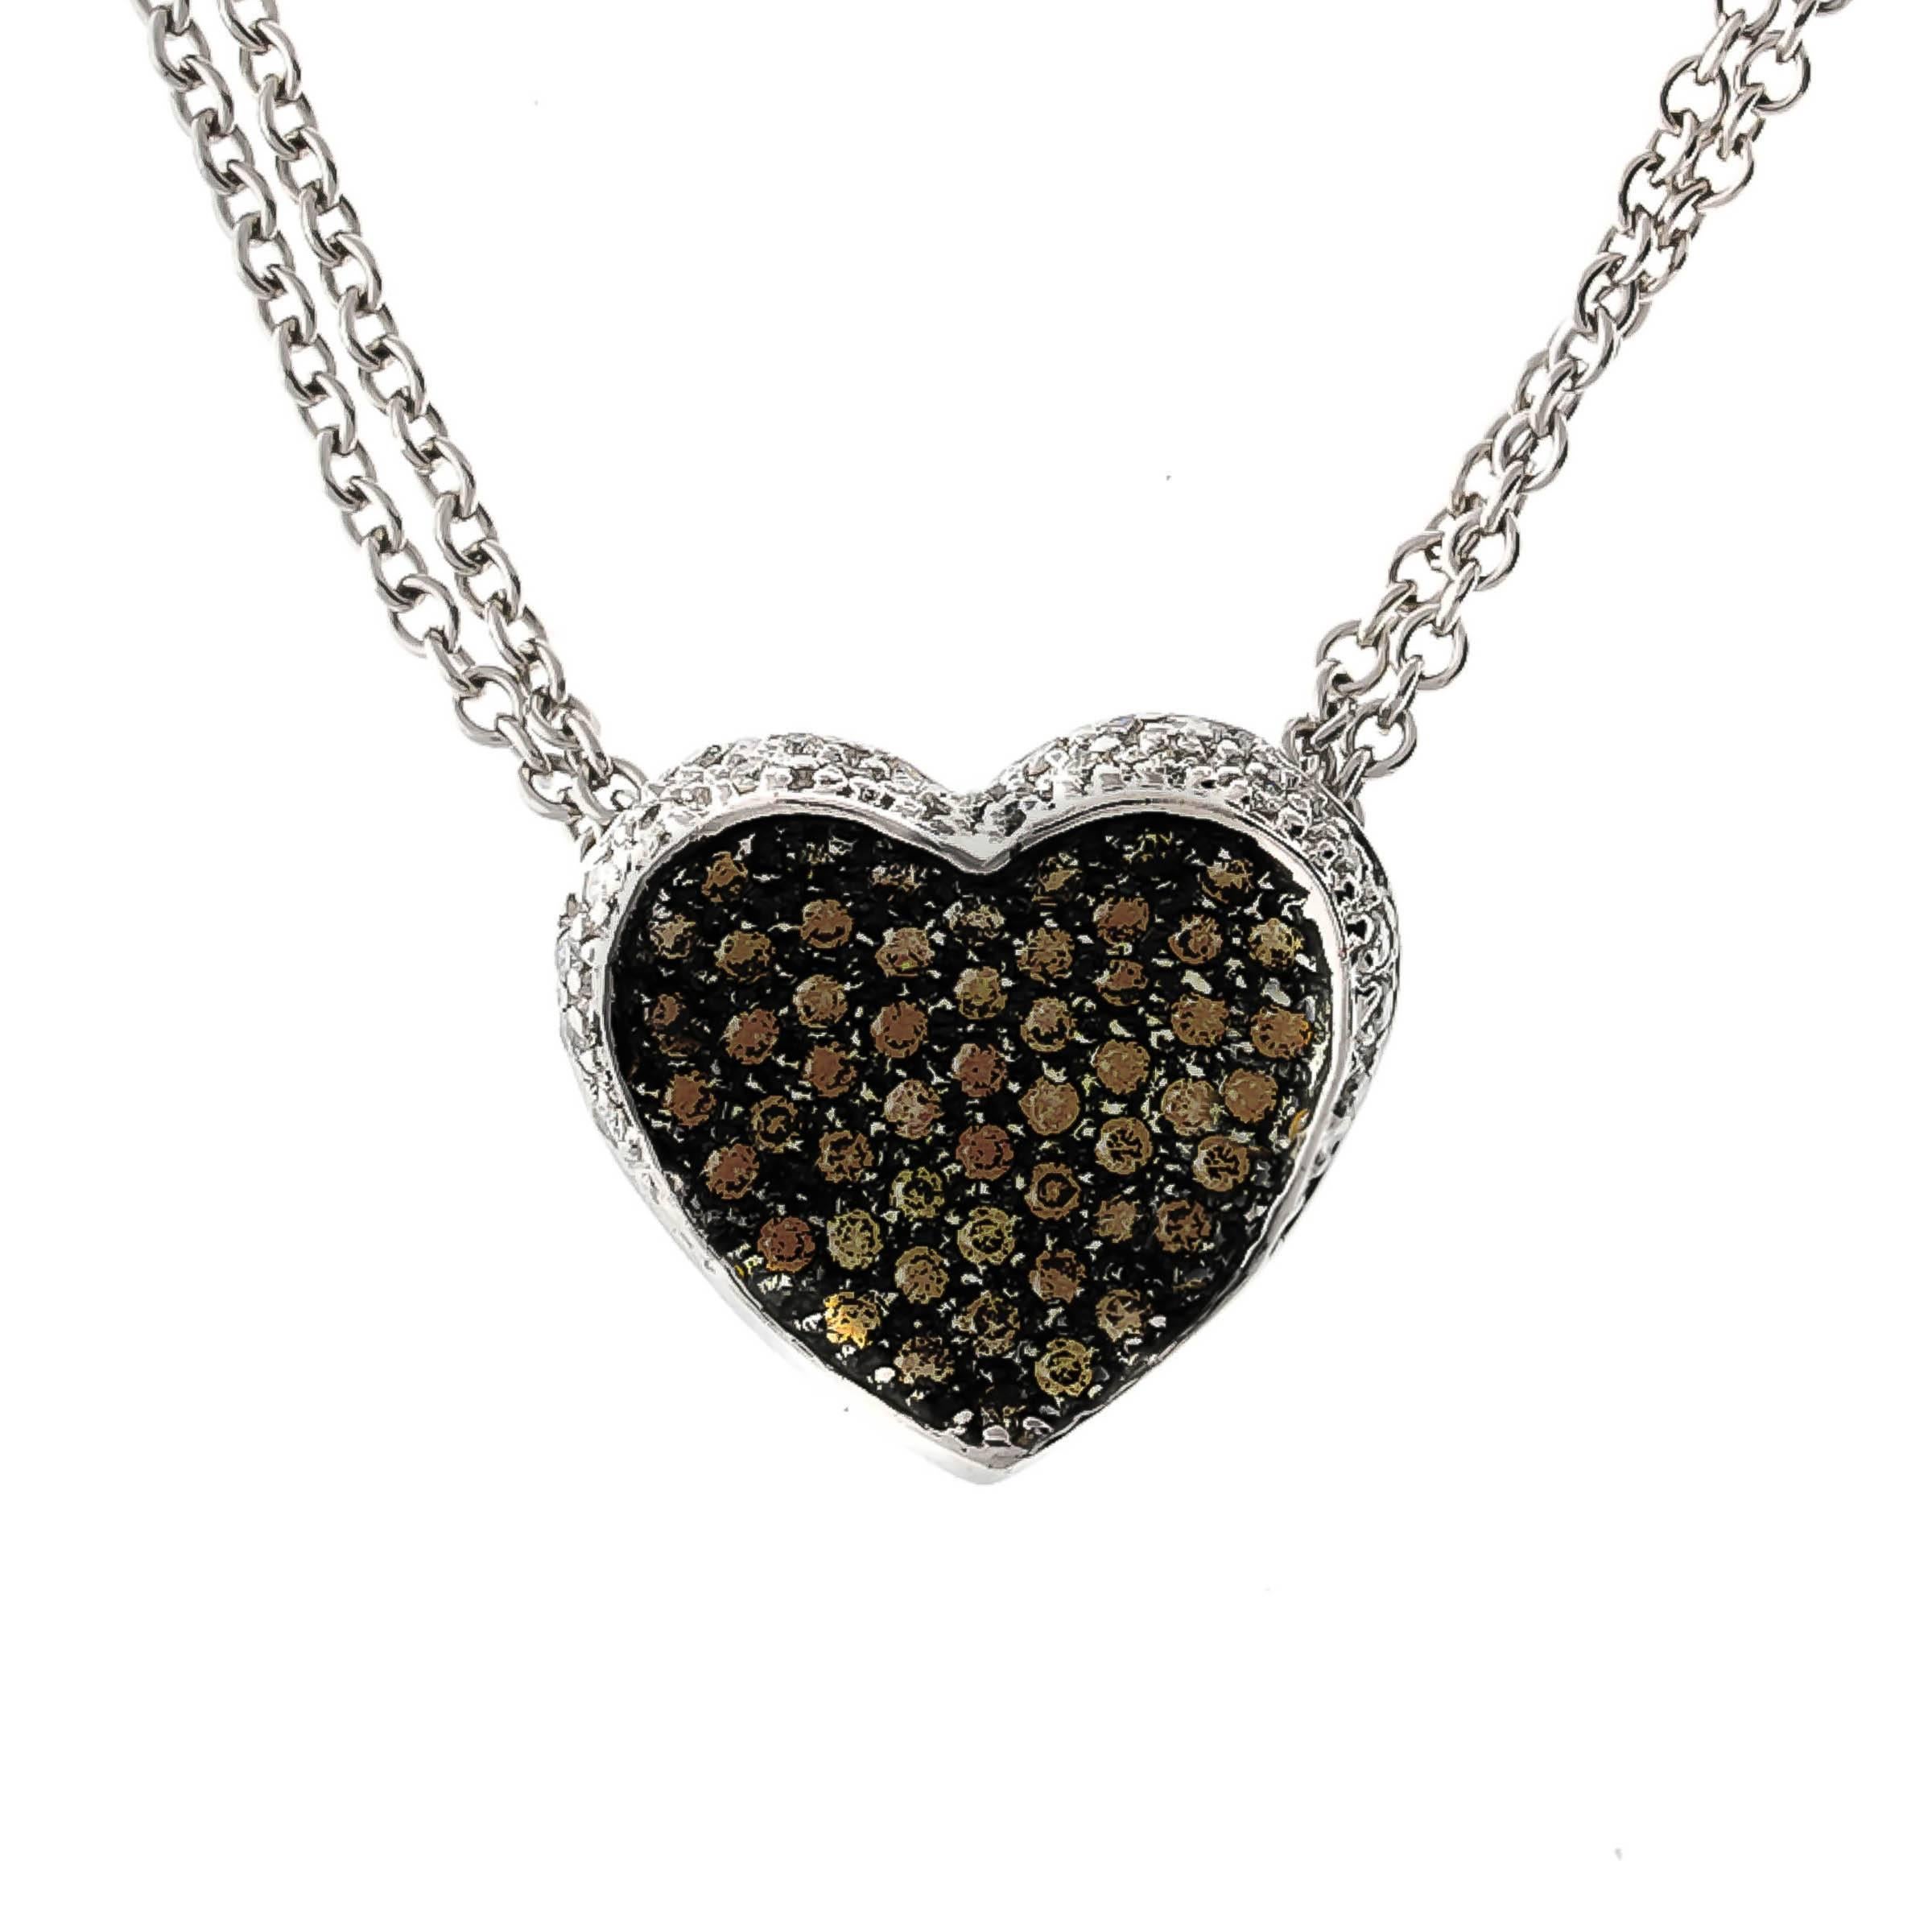 14K heart pendant on a double chain. The pendant contains 0.45 carat pave set cognac diamonds and 0.15 white diamonds. 